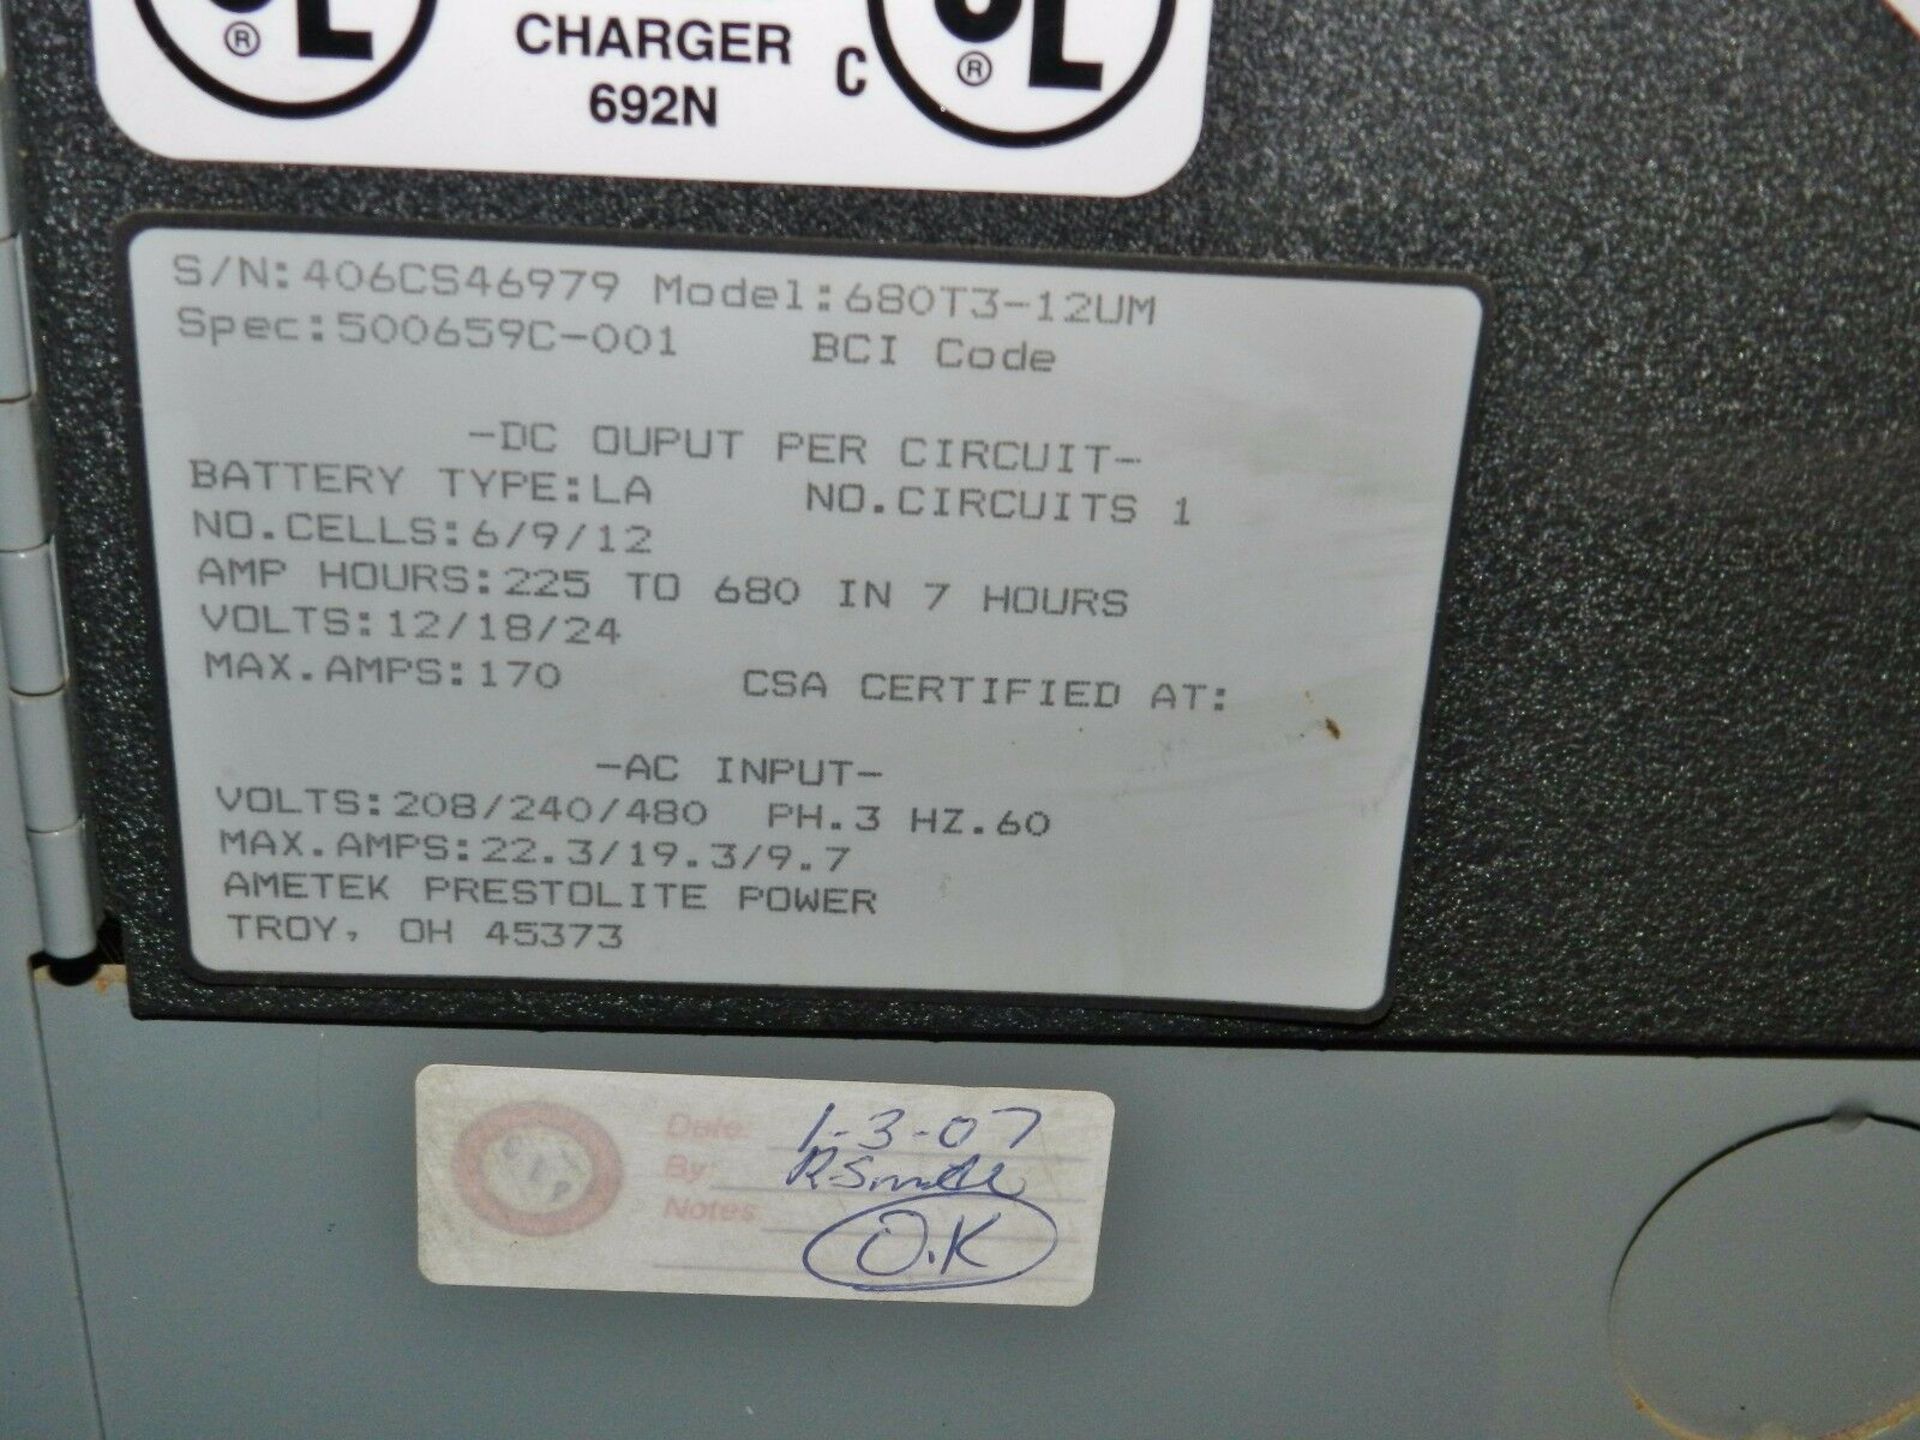 Prestolite Ultra Maxx 24 Volt Battery Charger 680T3-12UM - Image 2 of 2